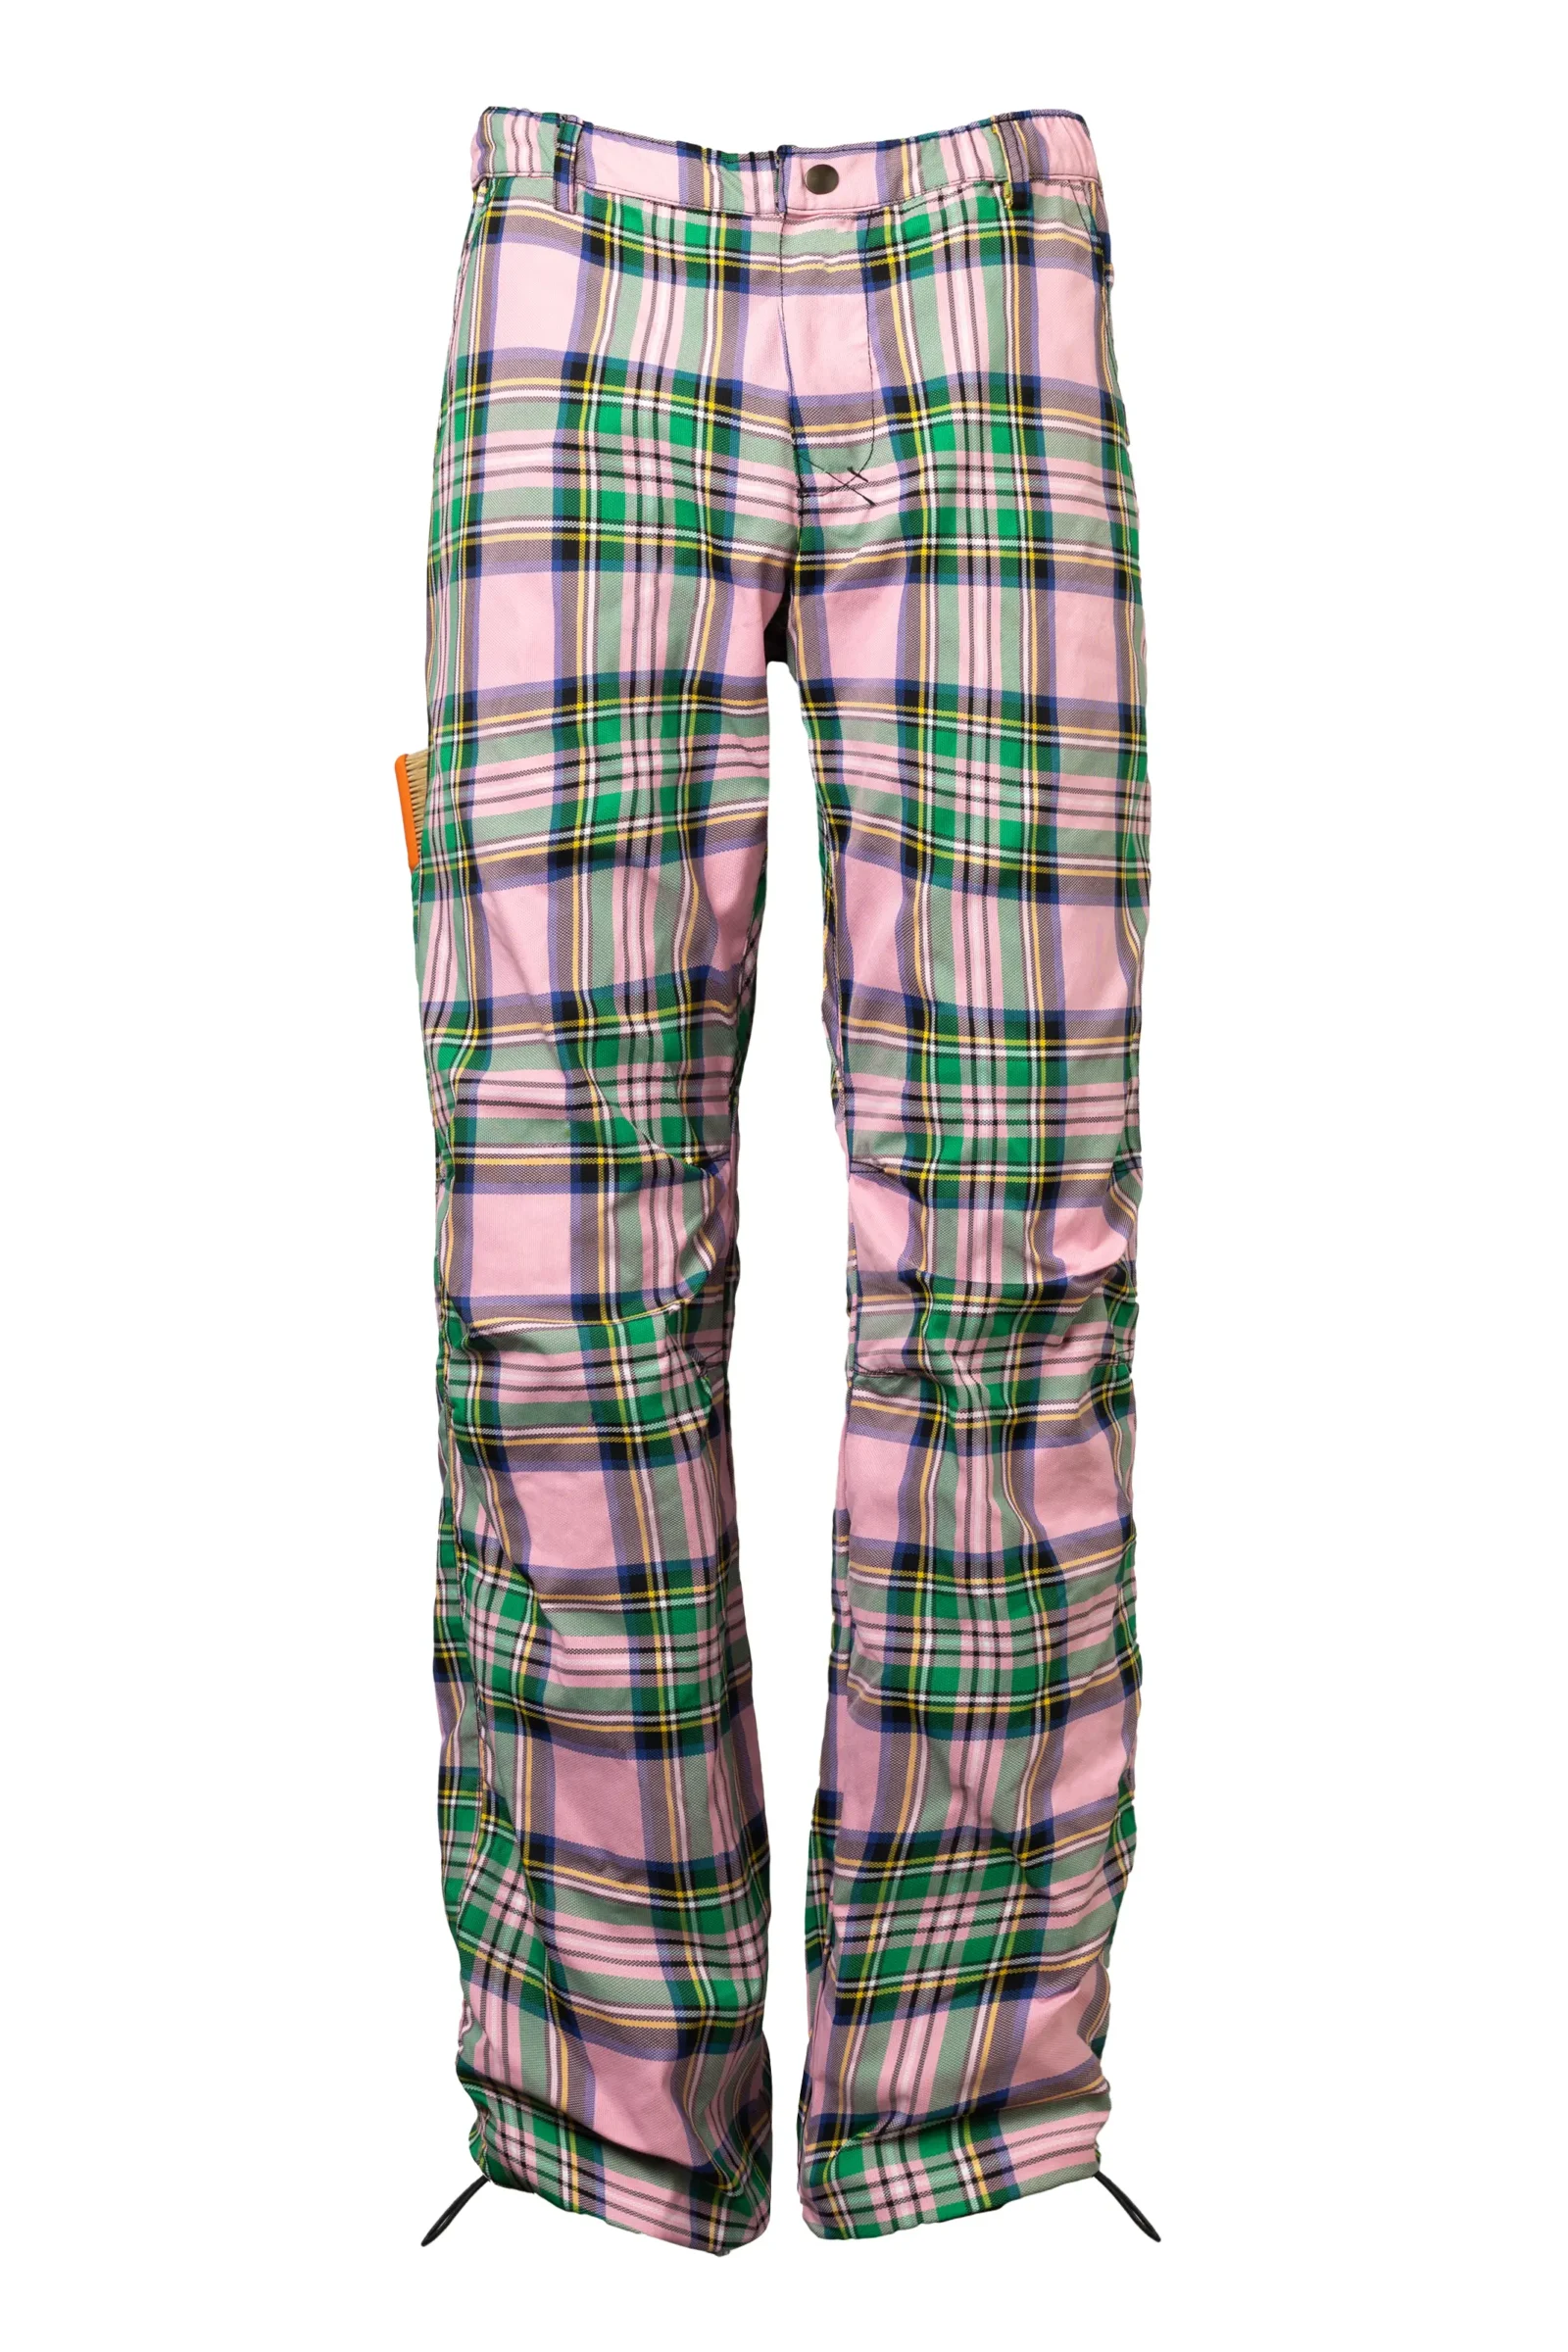 Pantalone uomo impermeabile tartan rosa/verde - BILLY 2 - MONVIC